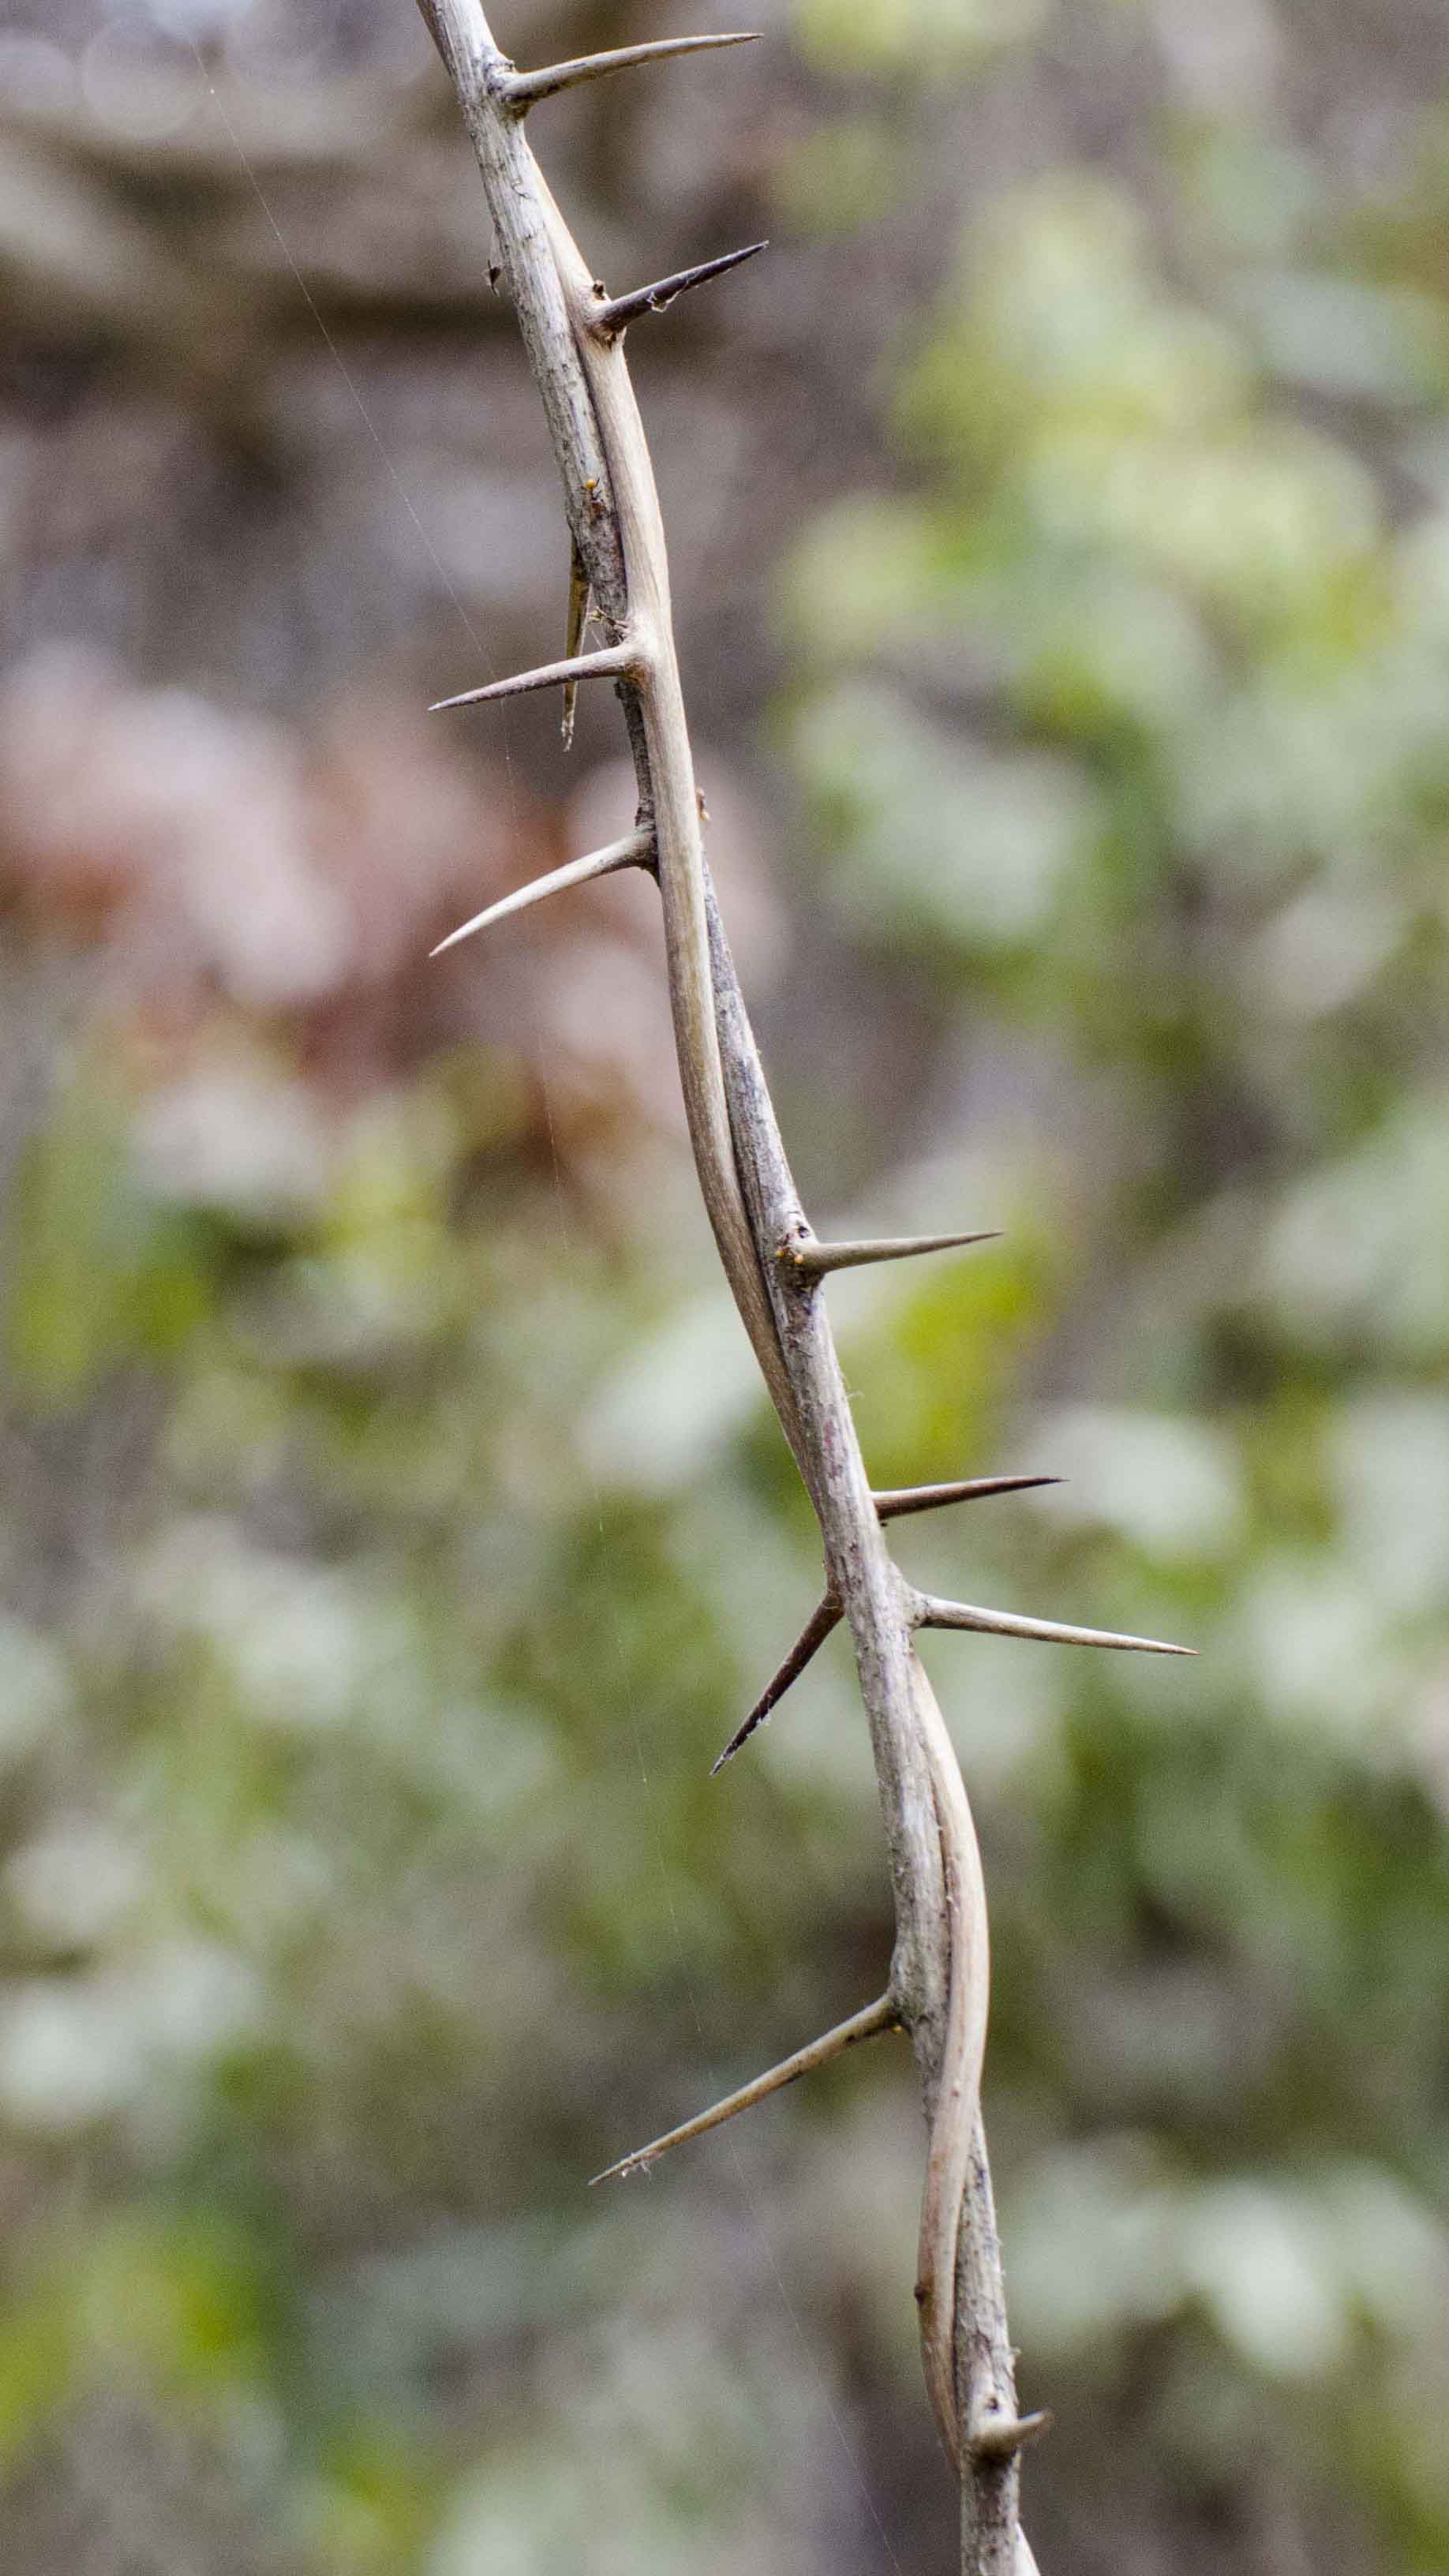 Thorns, Bosque Cerro Blanco, Guayaquil, Ecuador